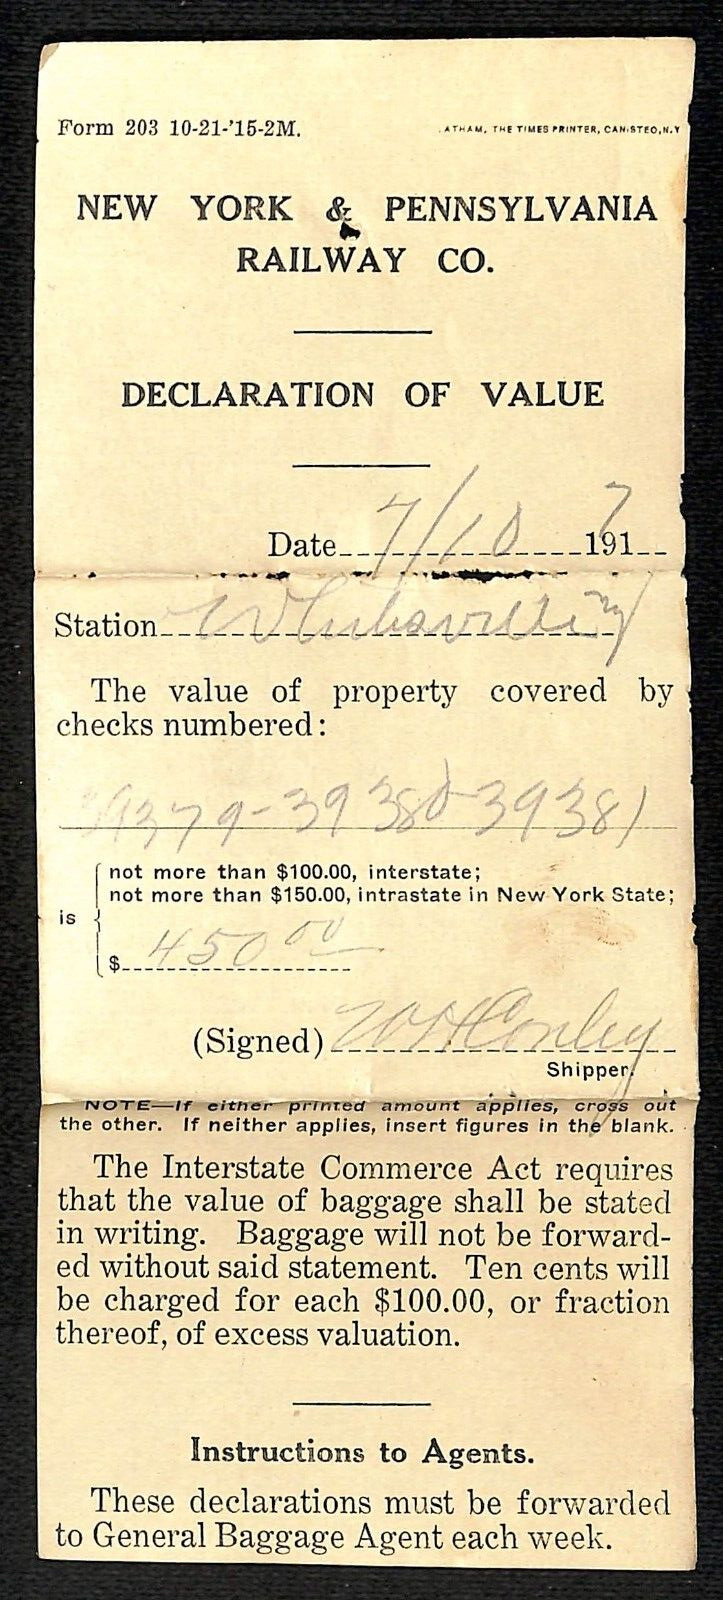 New York & Pennsylvania Railroad NYP July 10 1917 Declaration of Value Form